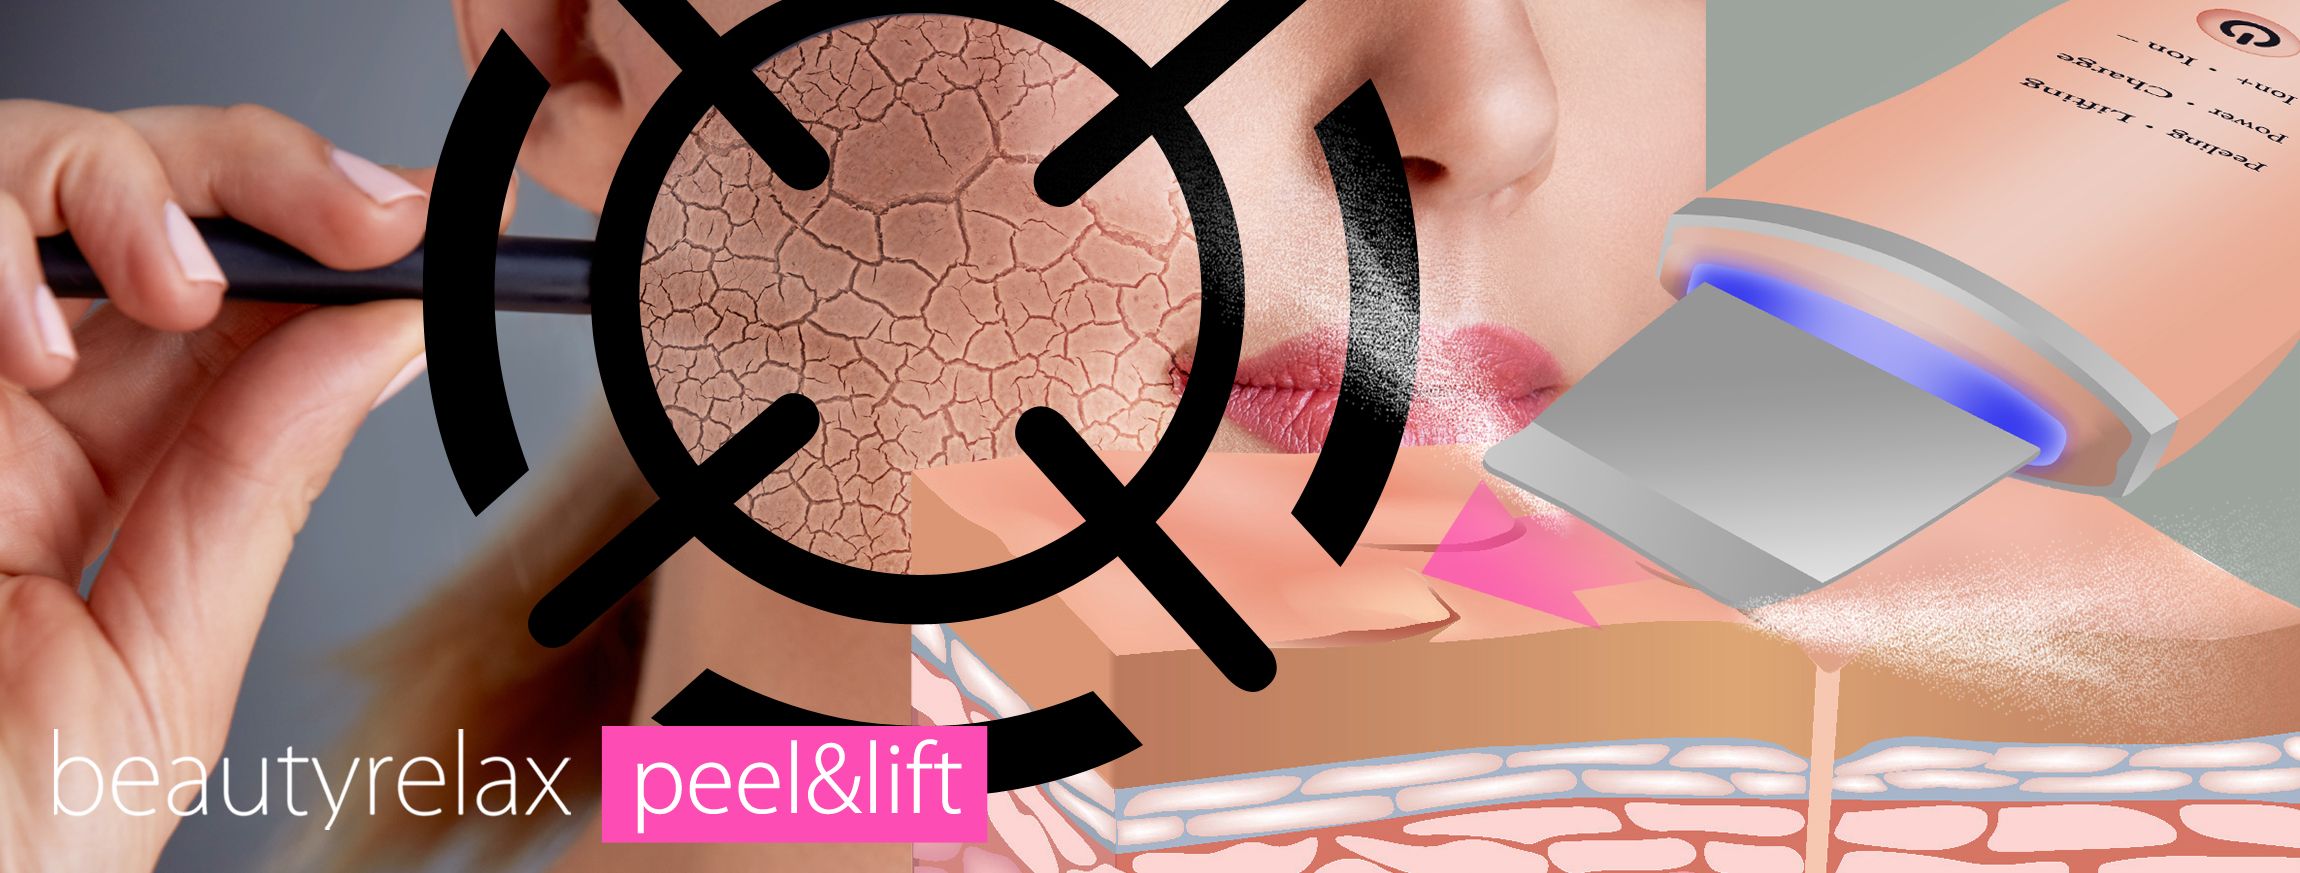 Ultrazvuková špachtle BeautyRelax Peel&lift